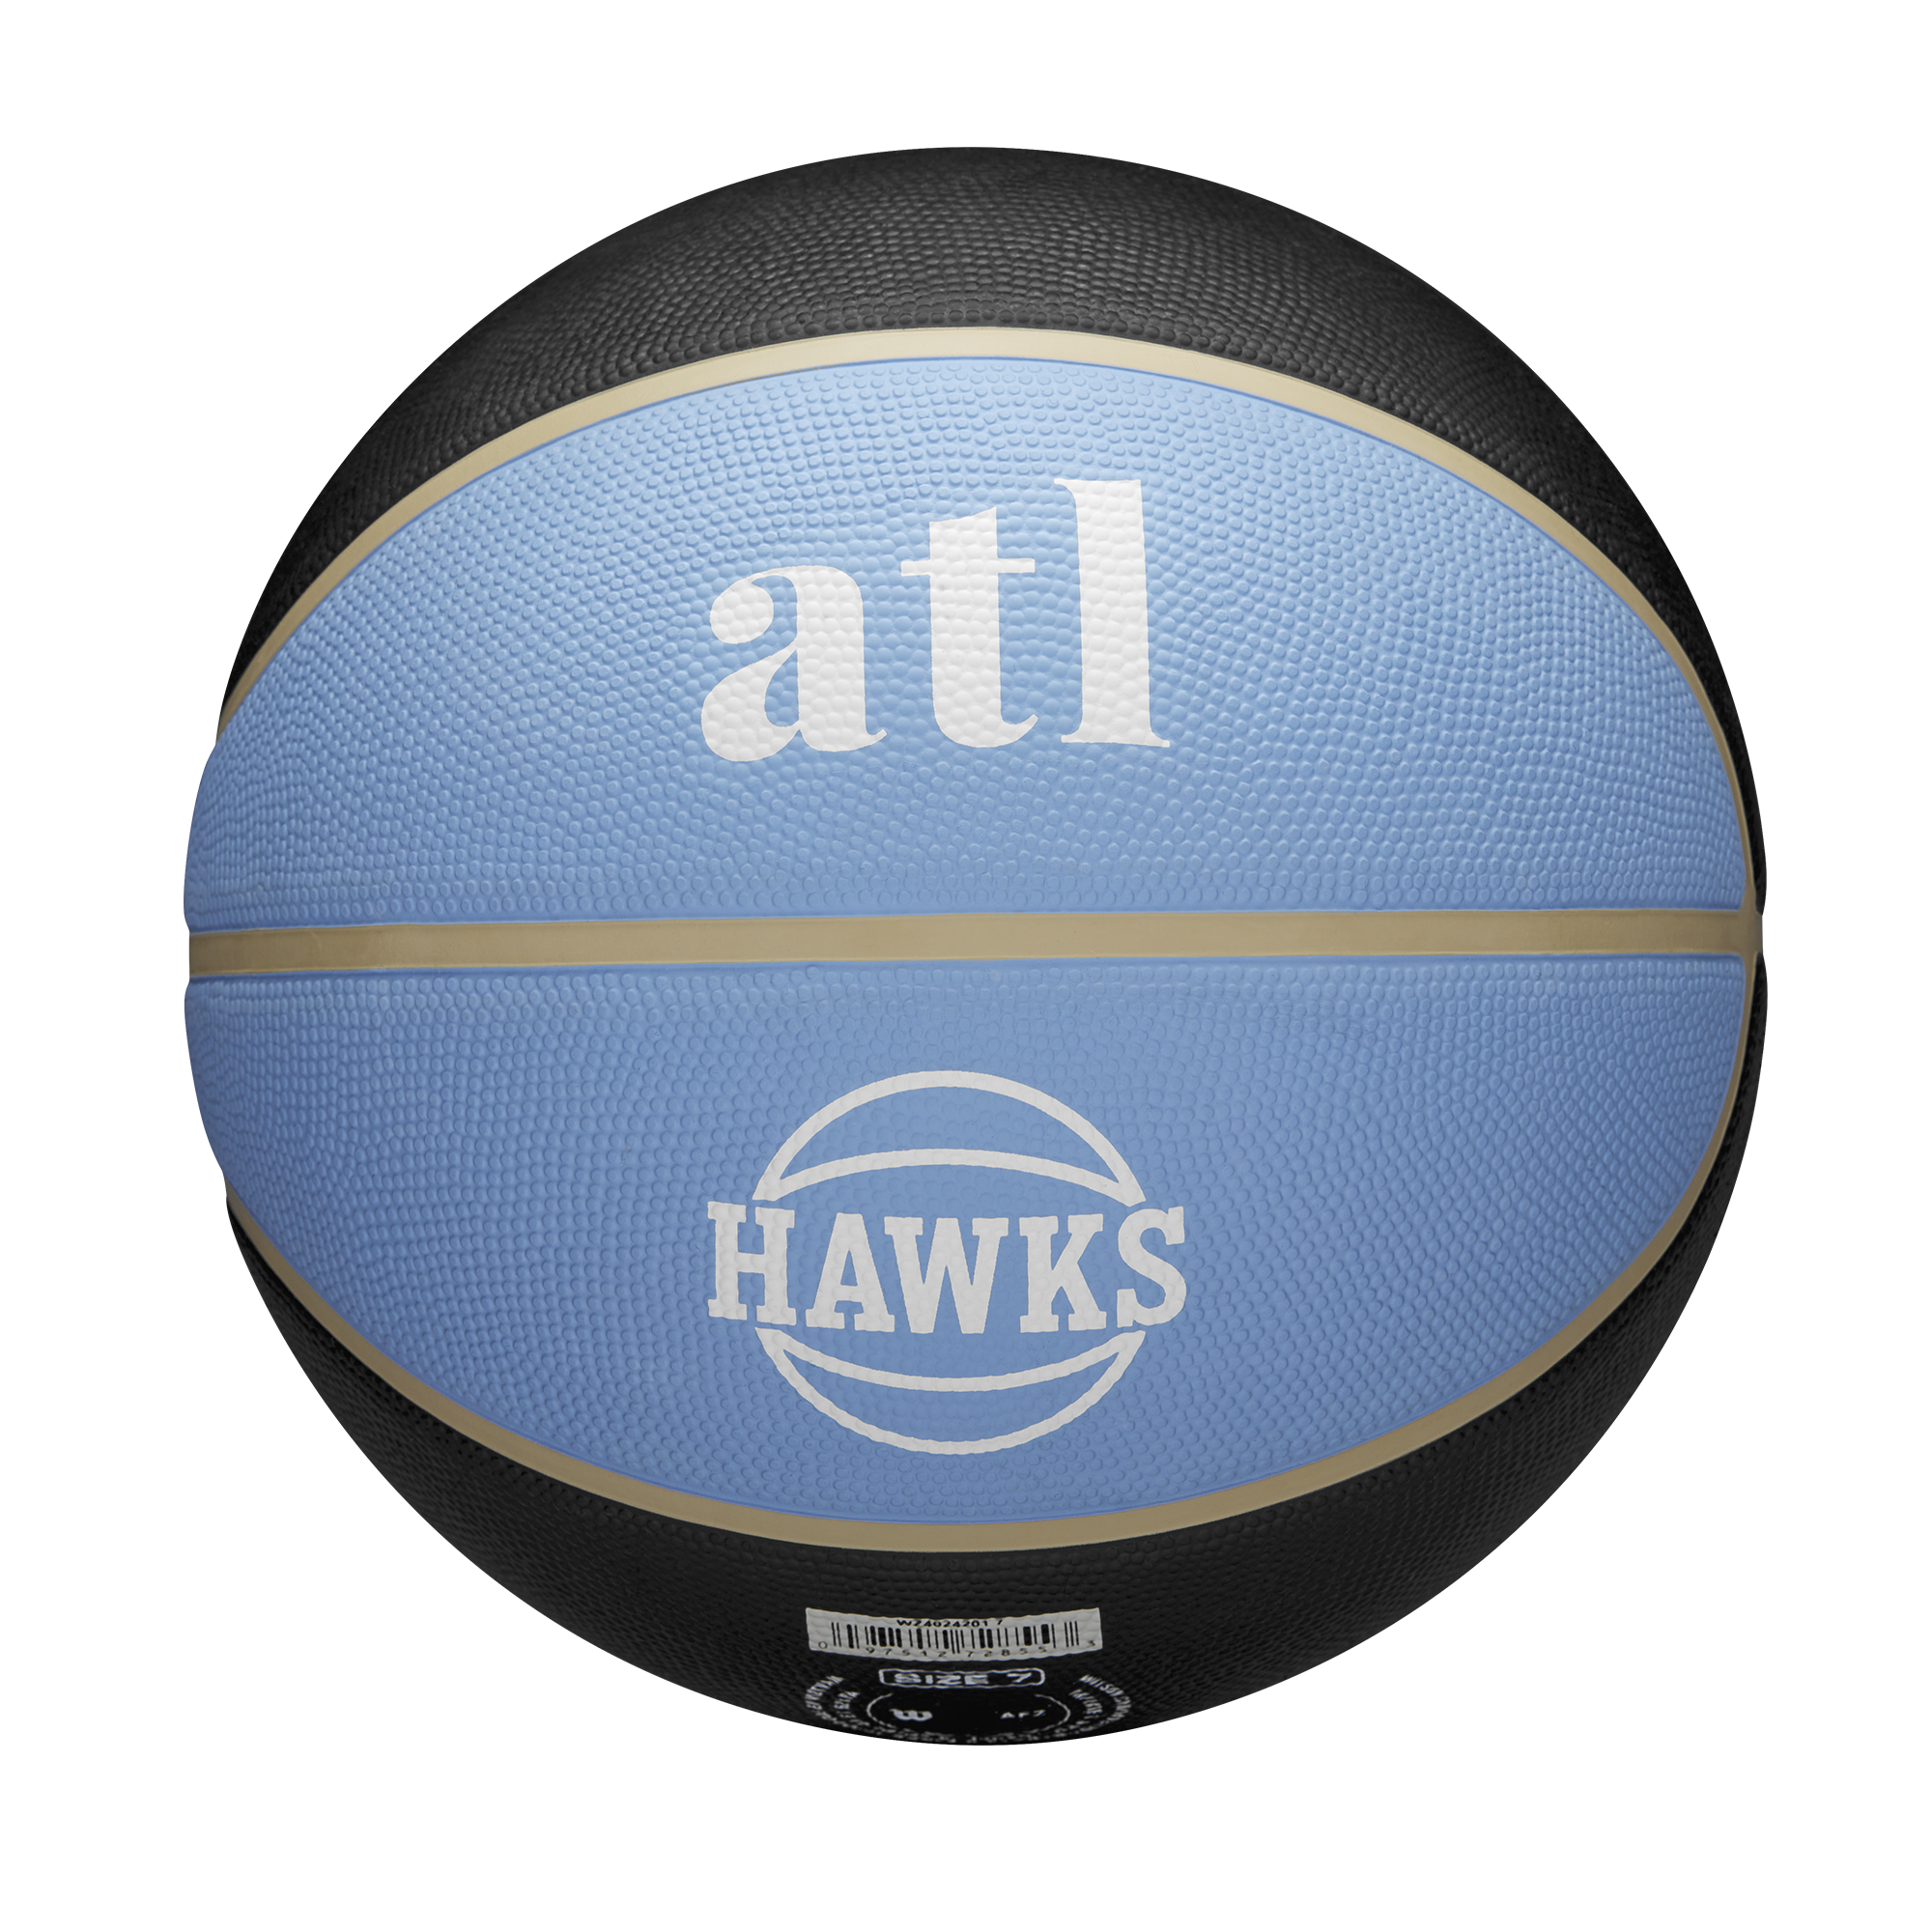 Hawks basketball towel